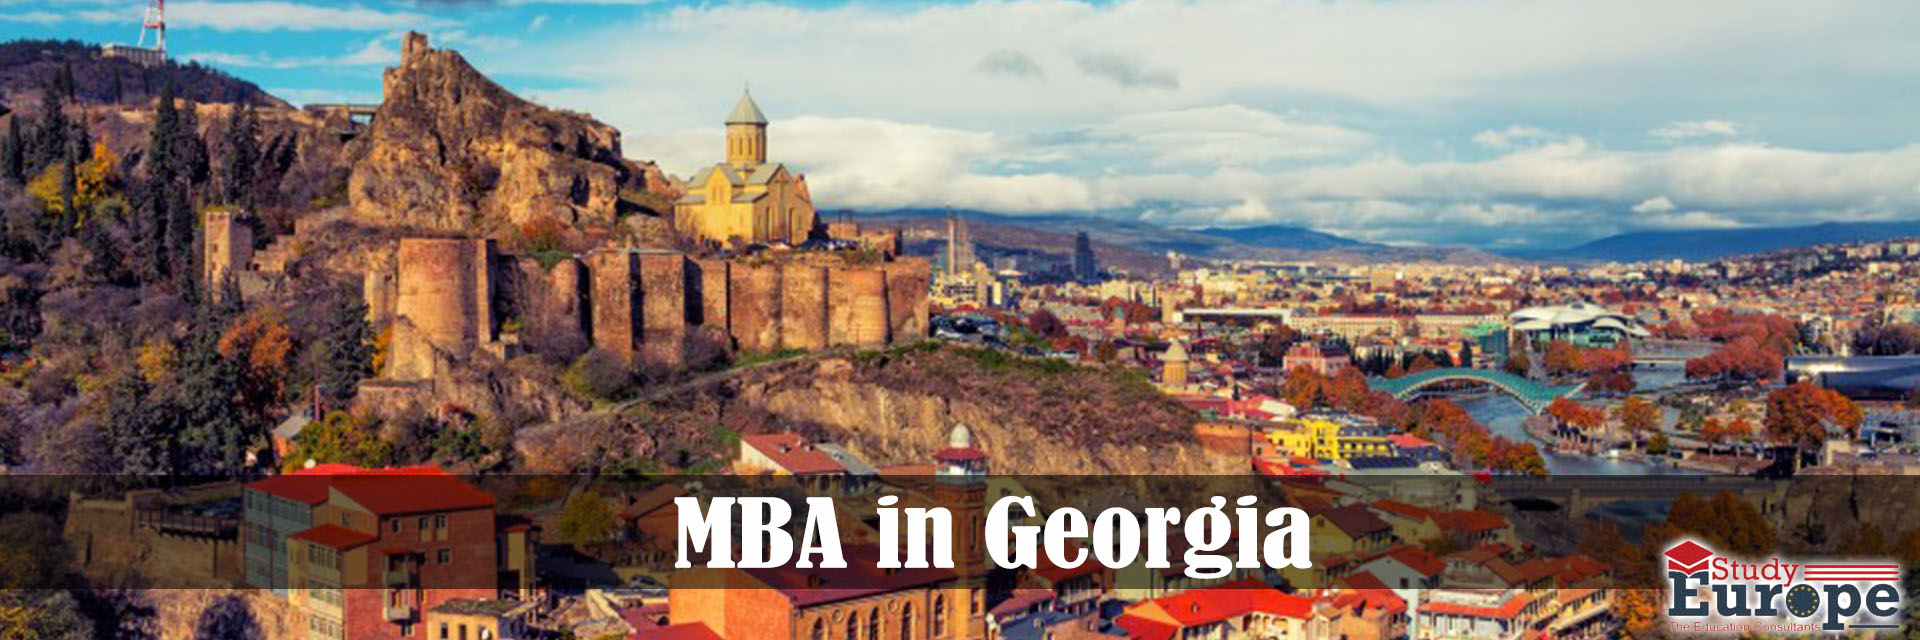 MBA in Georgia